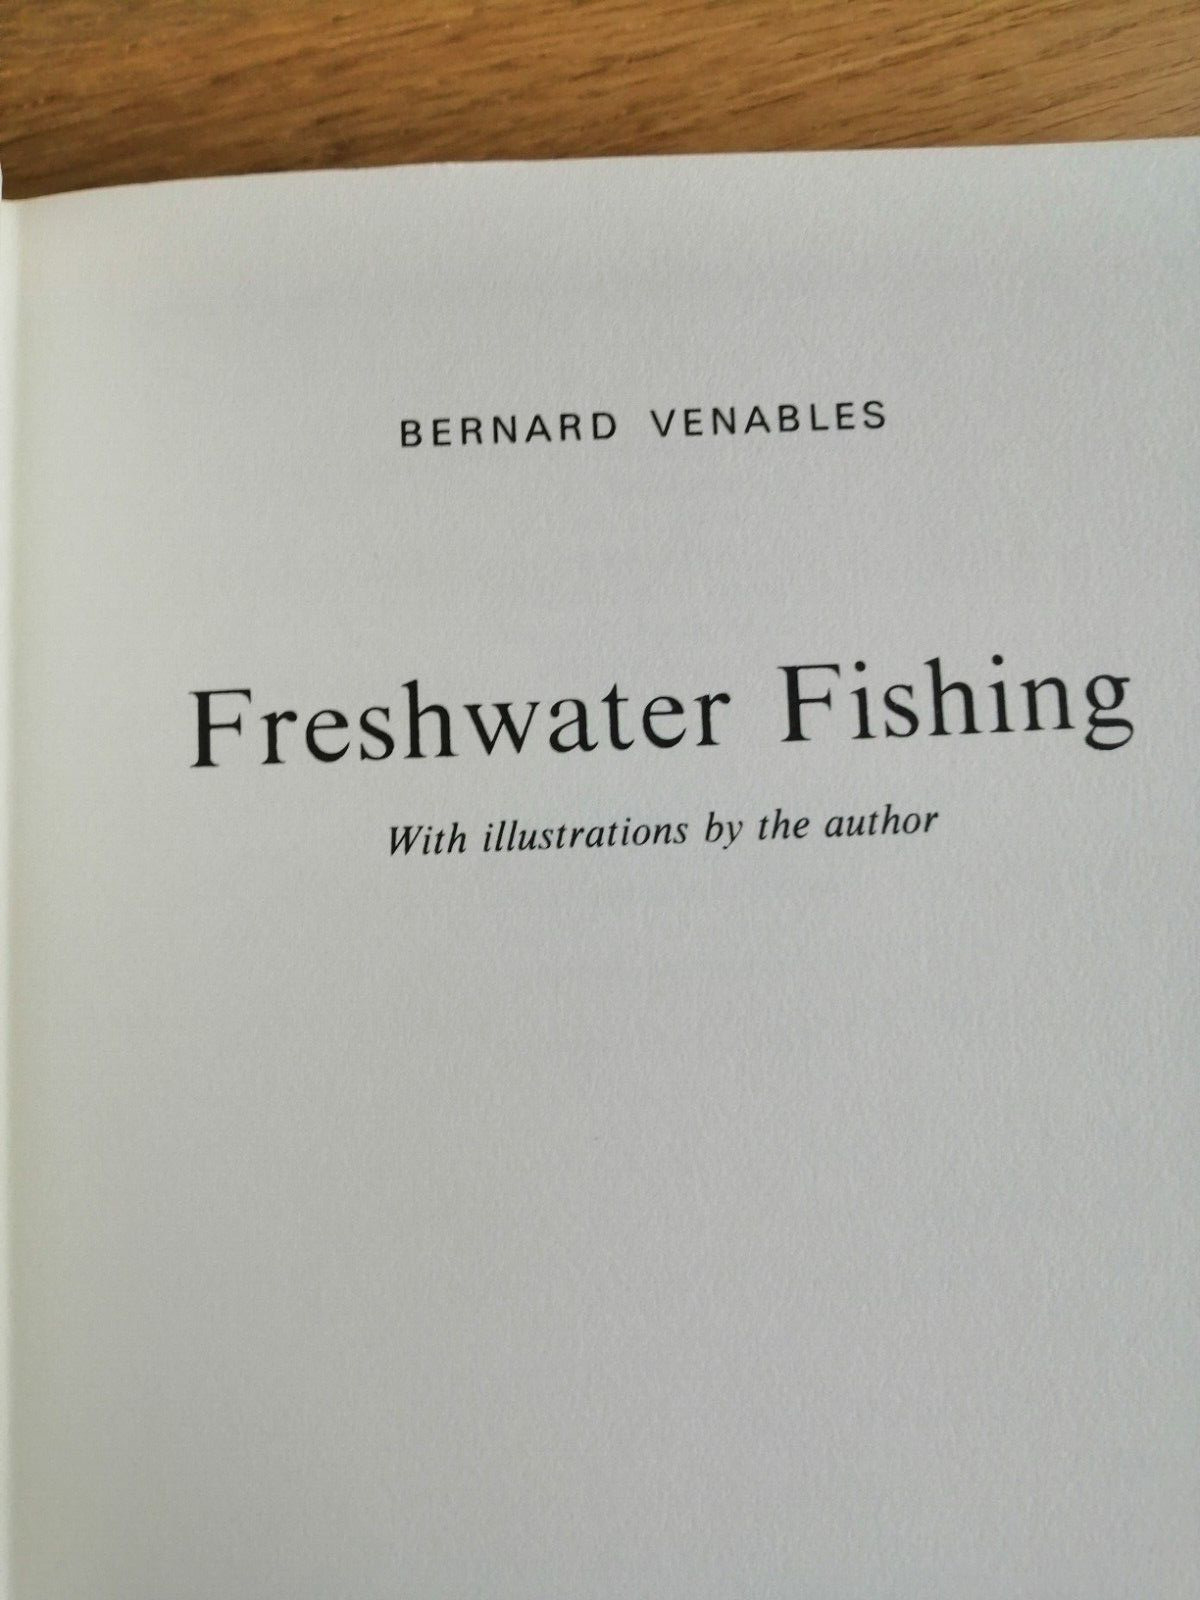 Freshwater Fishing by Bernard Venables 1973, in vgc